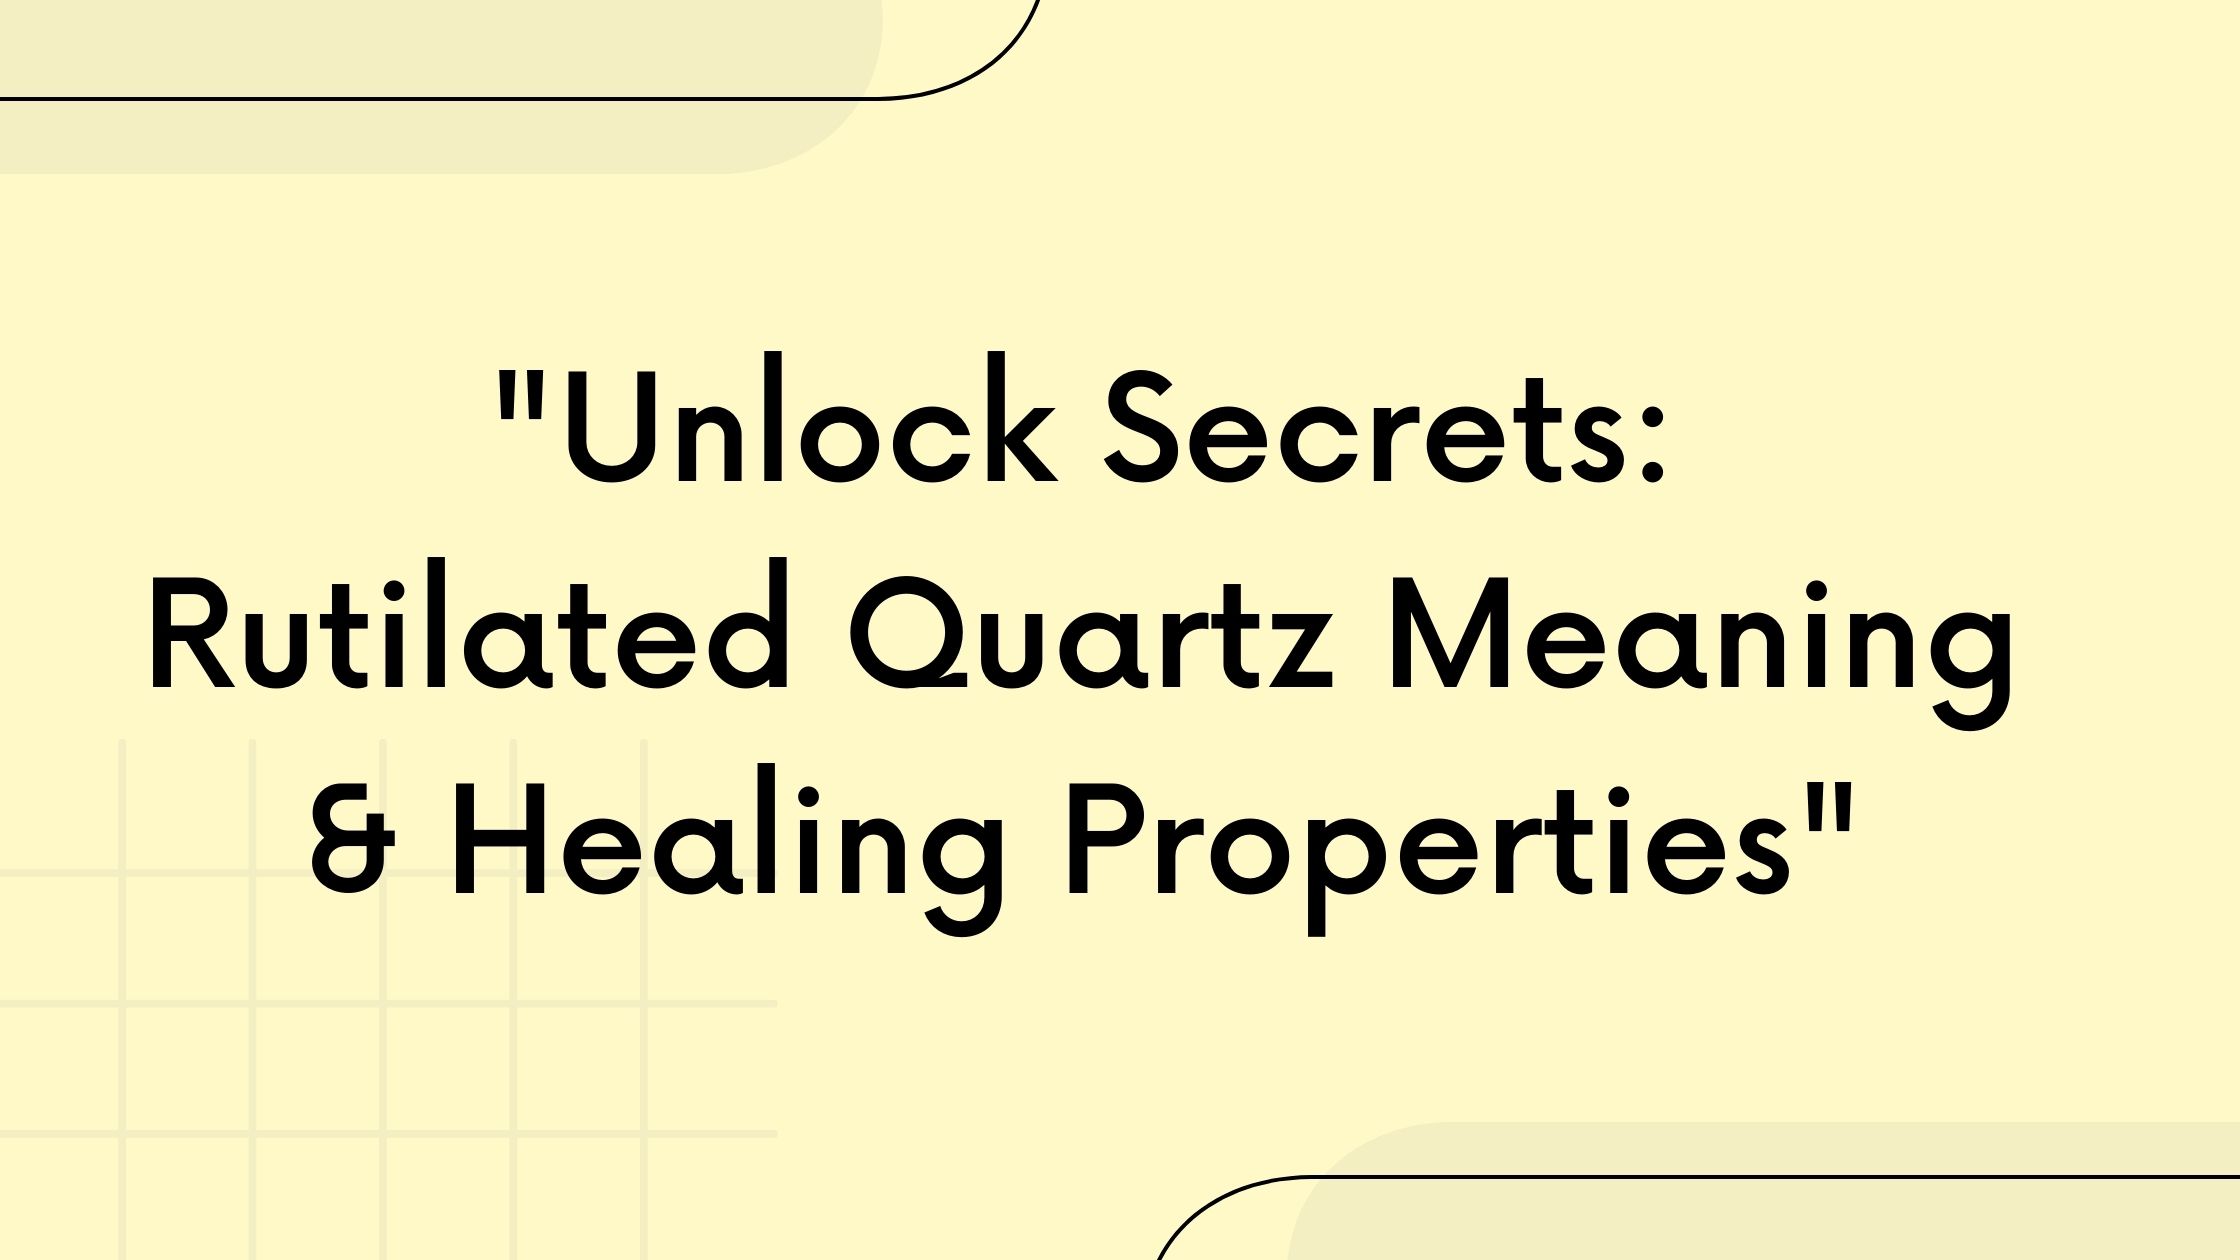 "Unlock Secrets: Rutilated Quartz Meaning & Healing Properties"